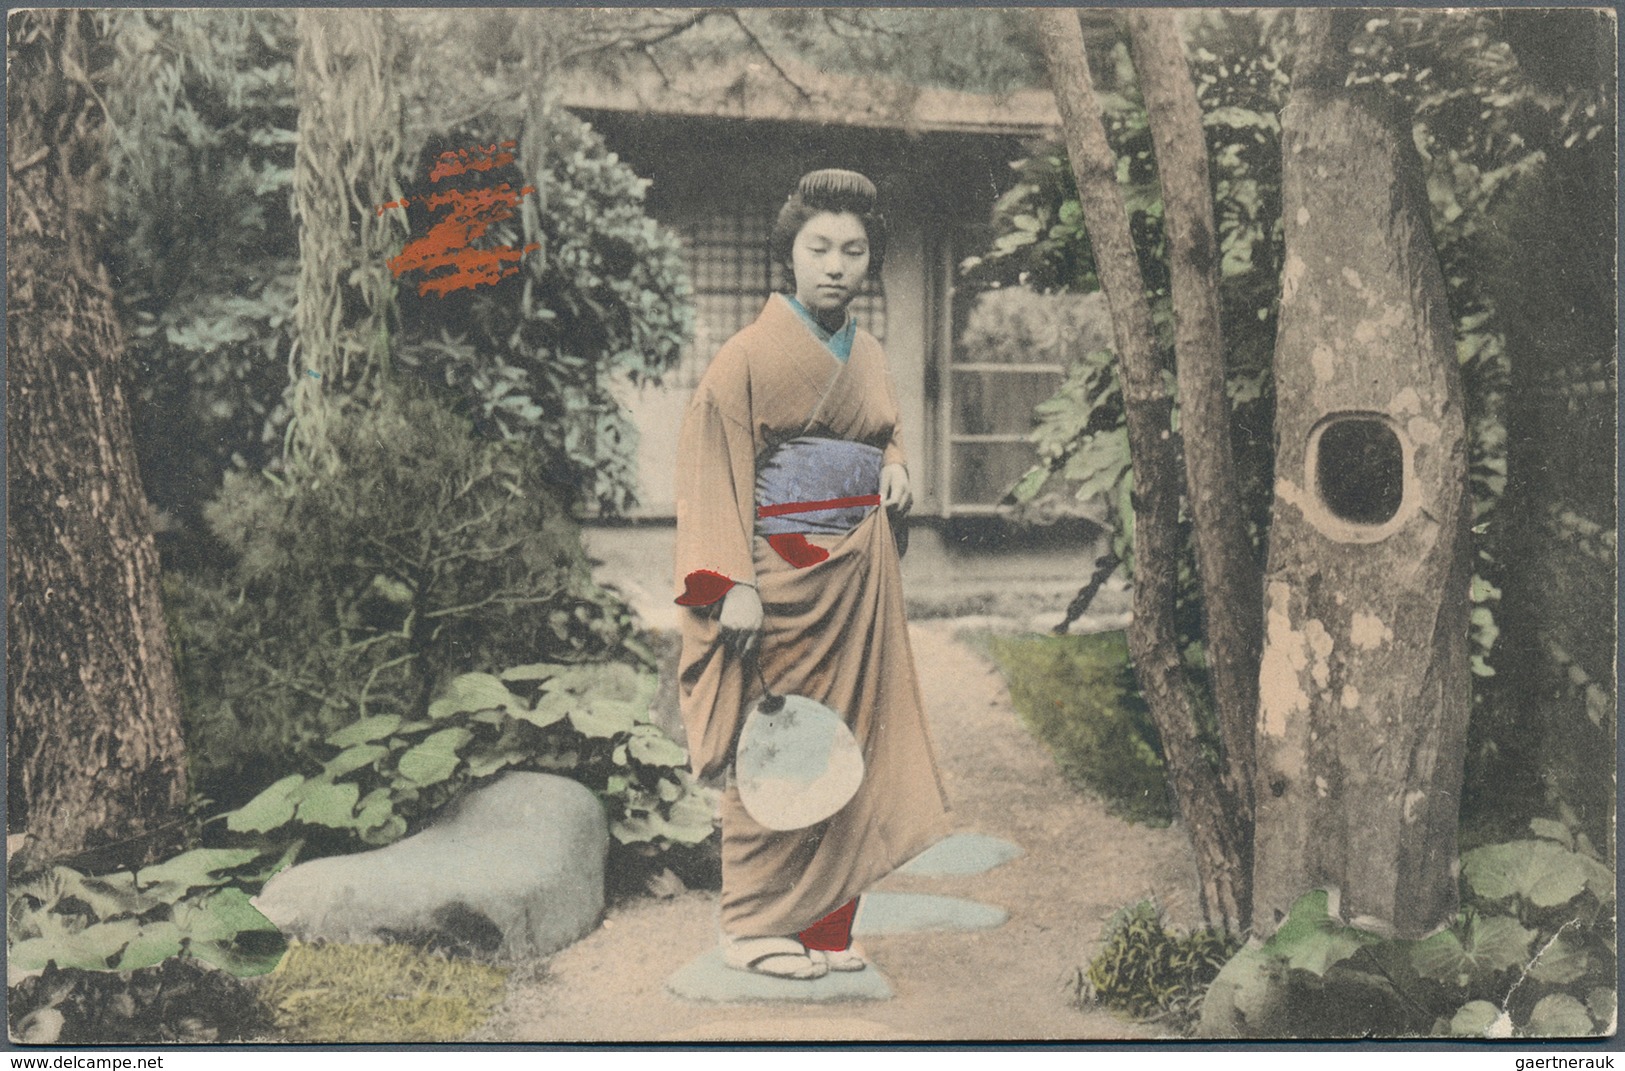 29481 Japan - Besonderheiten: 1900/30 (ca.) 20 ppc (two mailed) showing ladies, geishas with interesting h